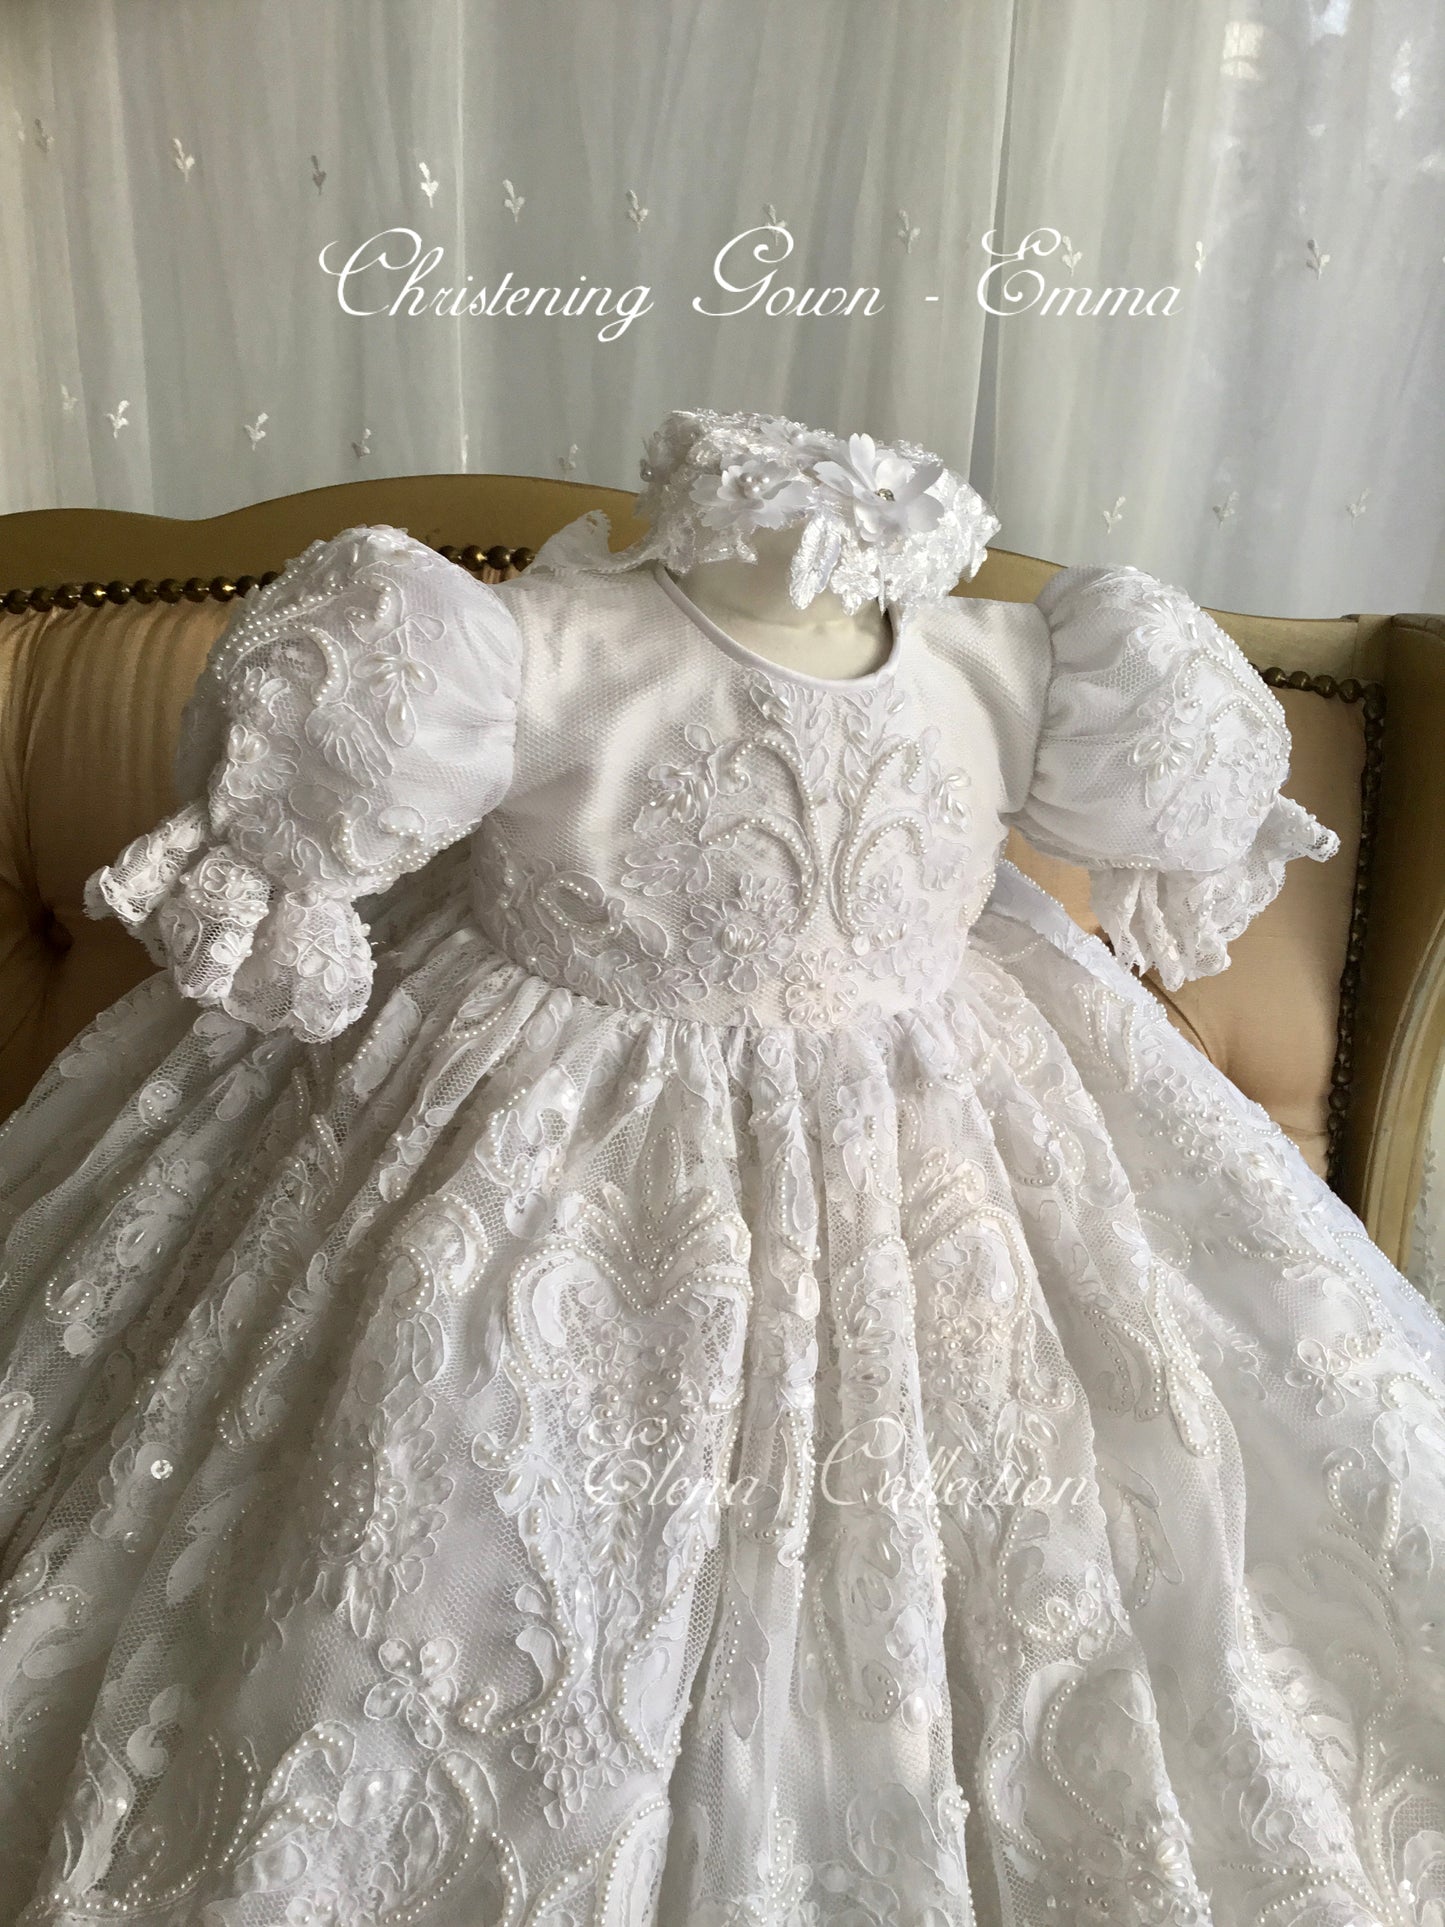 Christening Gown - Emma